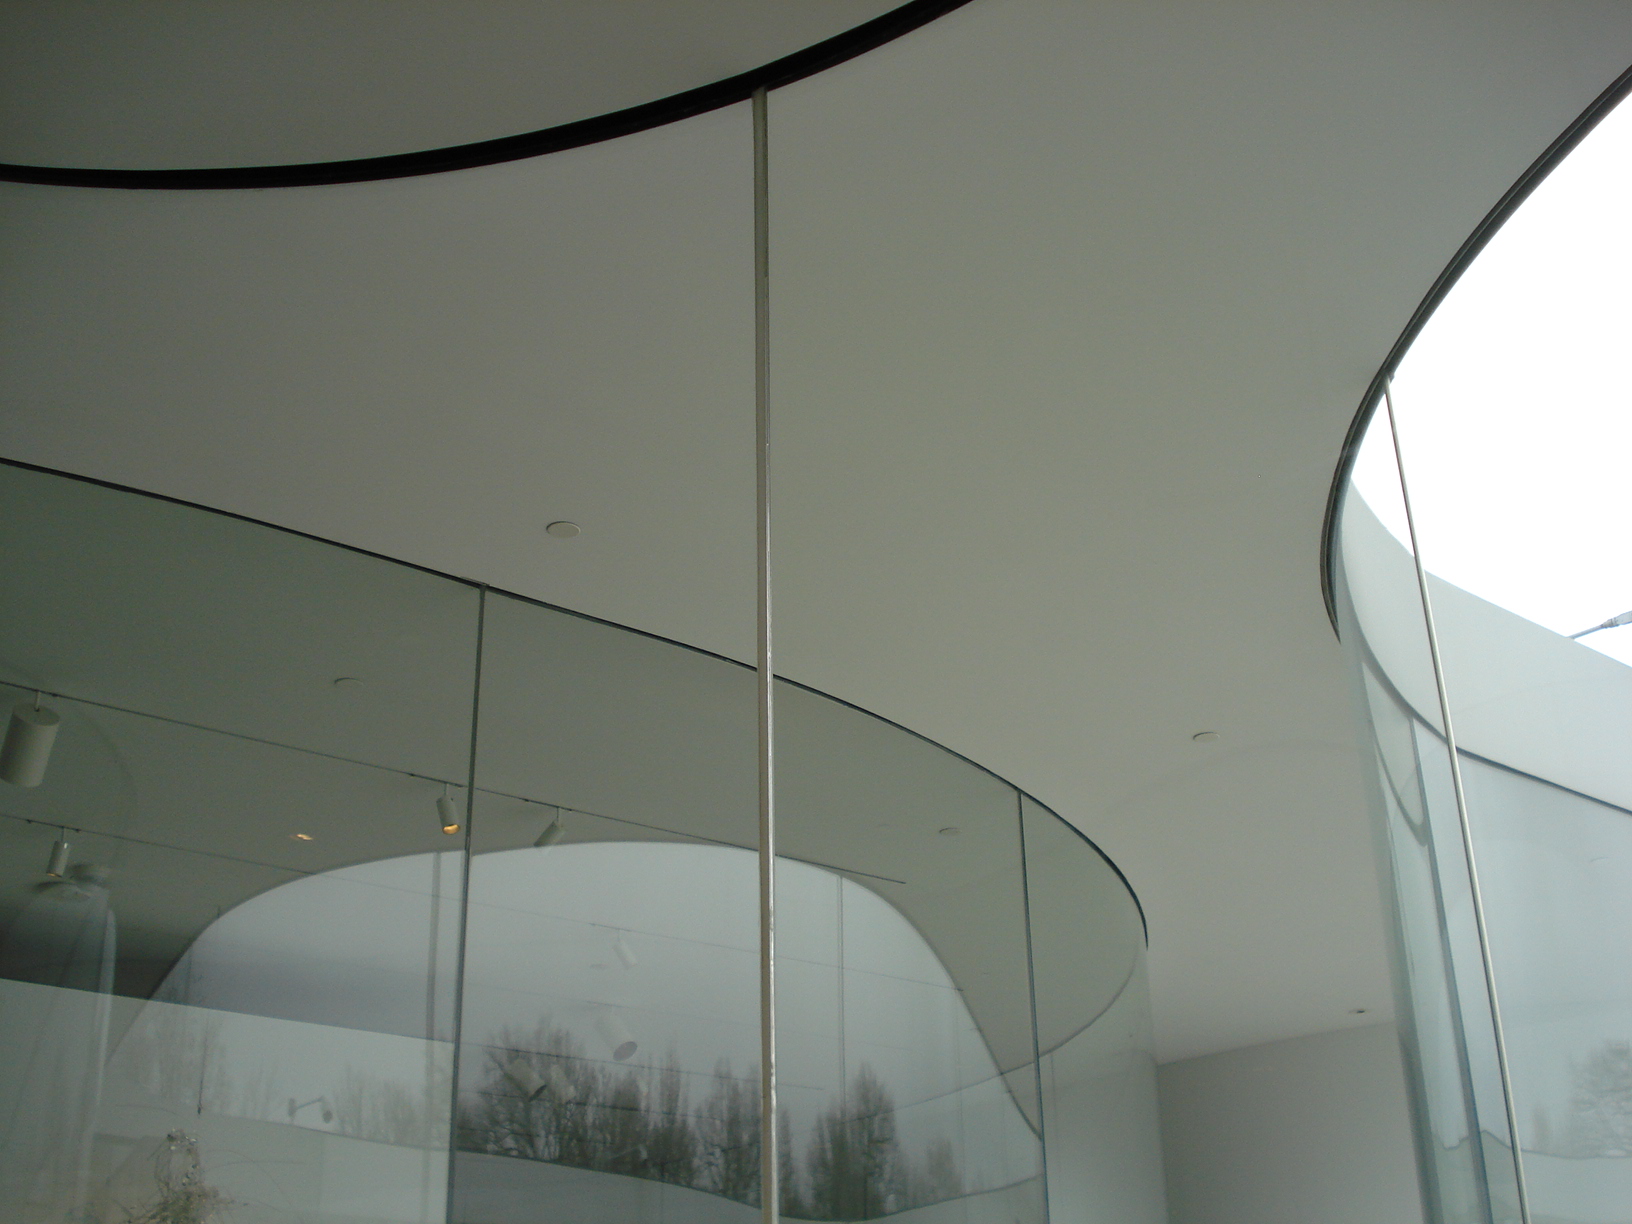 Image of glass pavilion detail